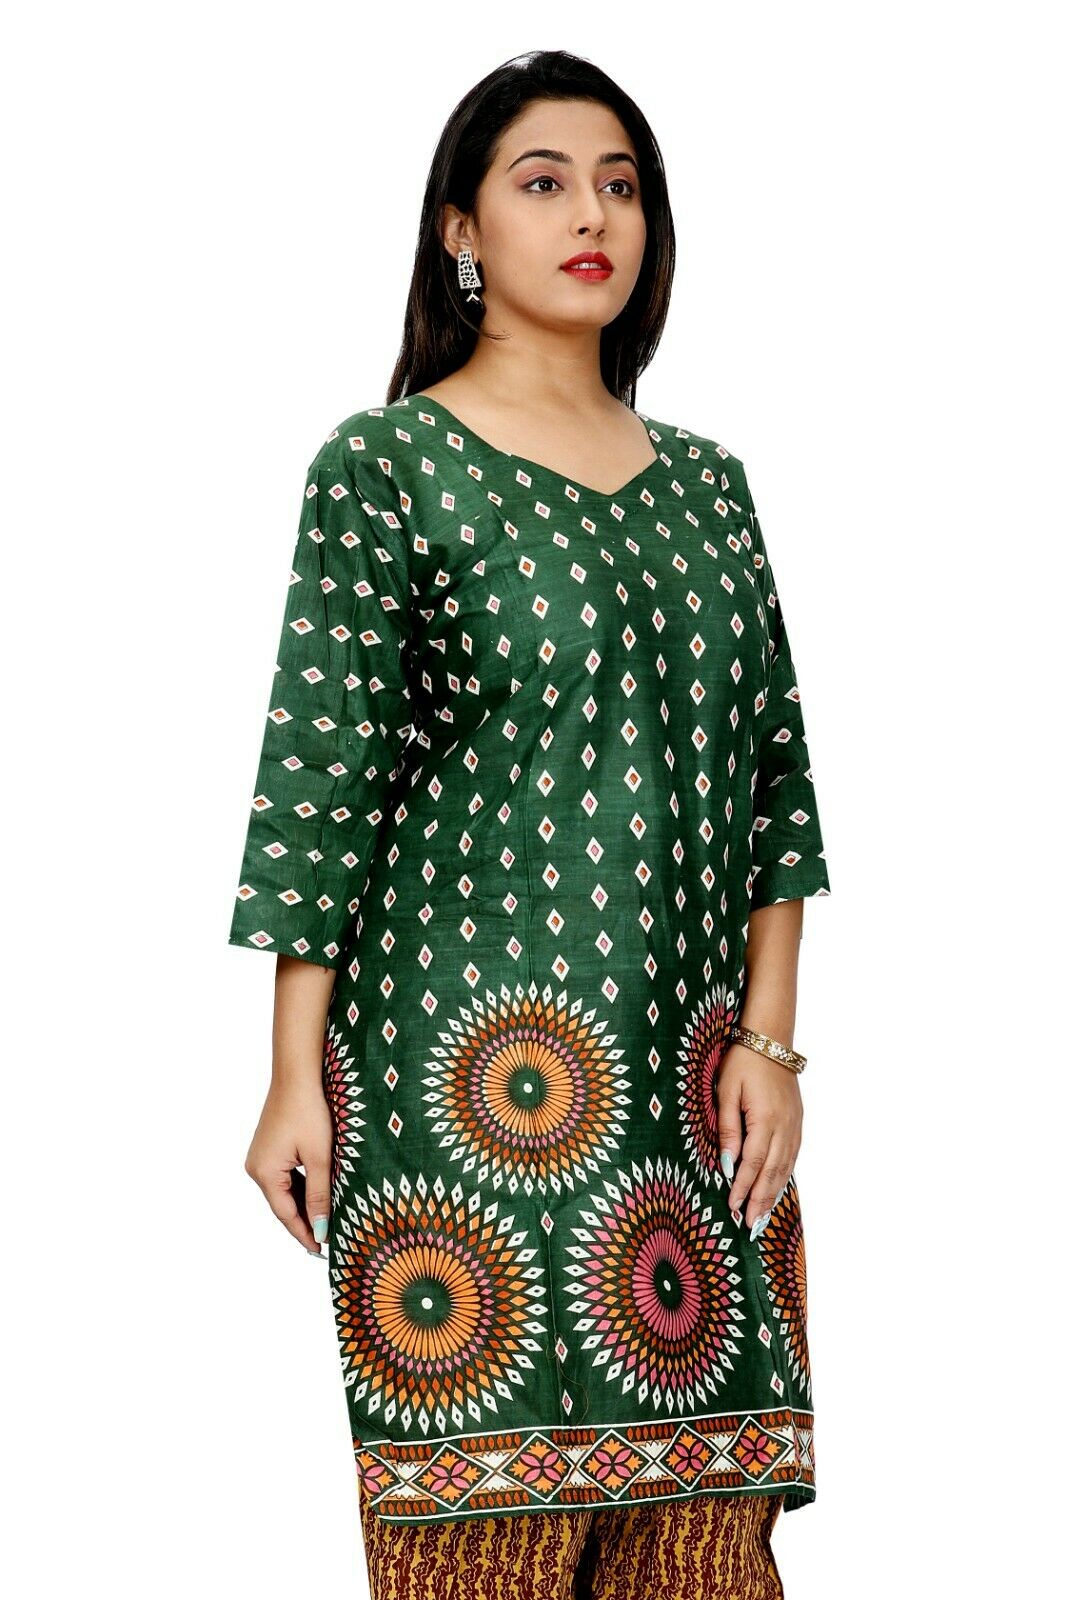 Green Cotton  Designer Ethnic  Full Sleeves  Salwar kameez chest size 50